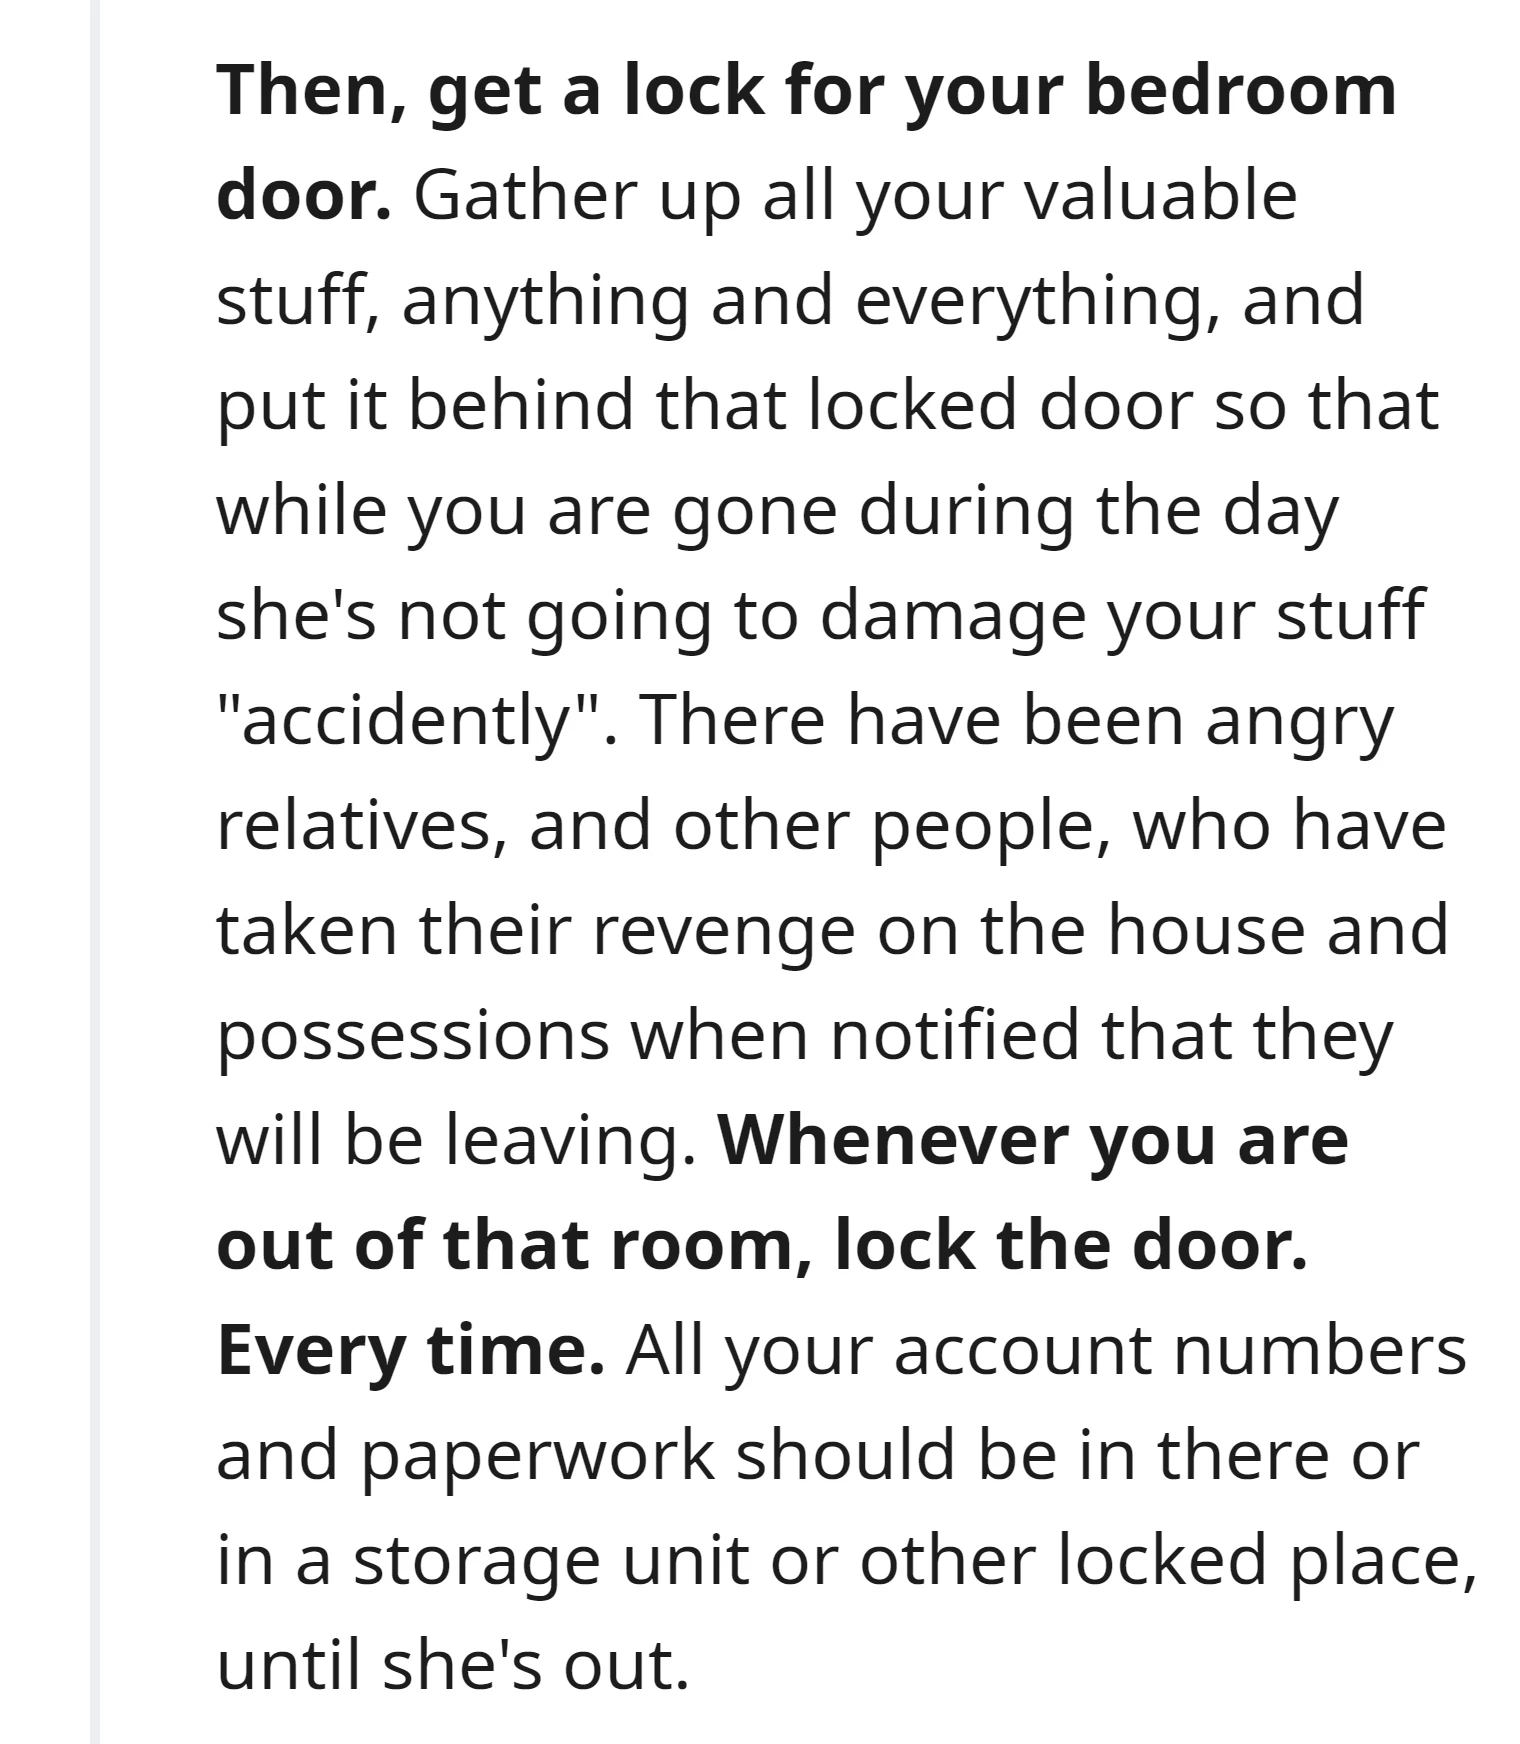 The OP should install a lock on their bedroom door, keeping it locked